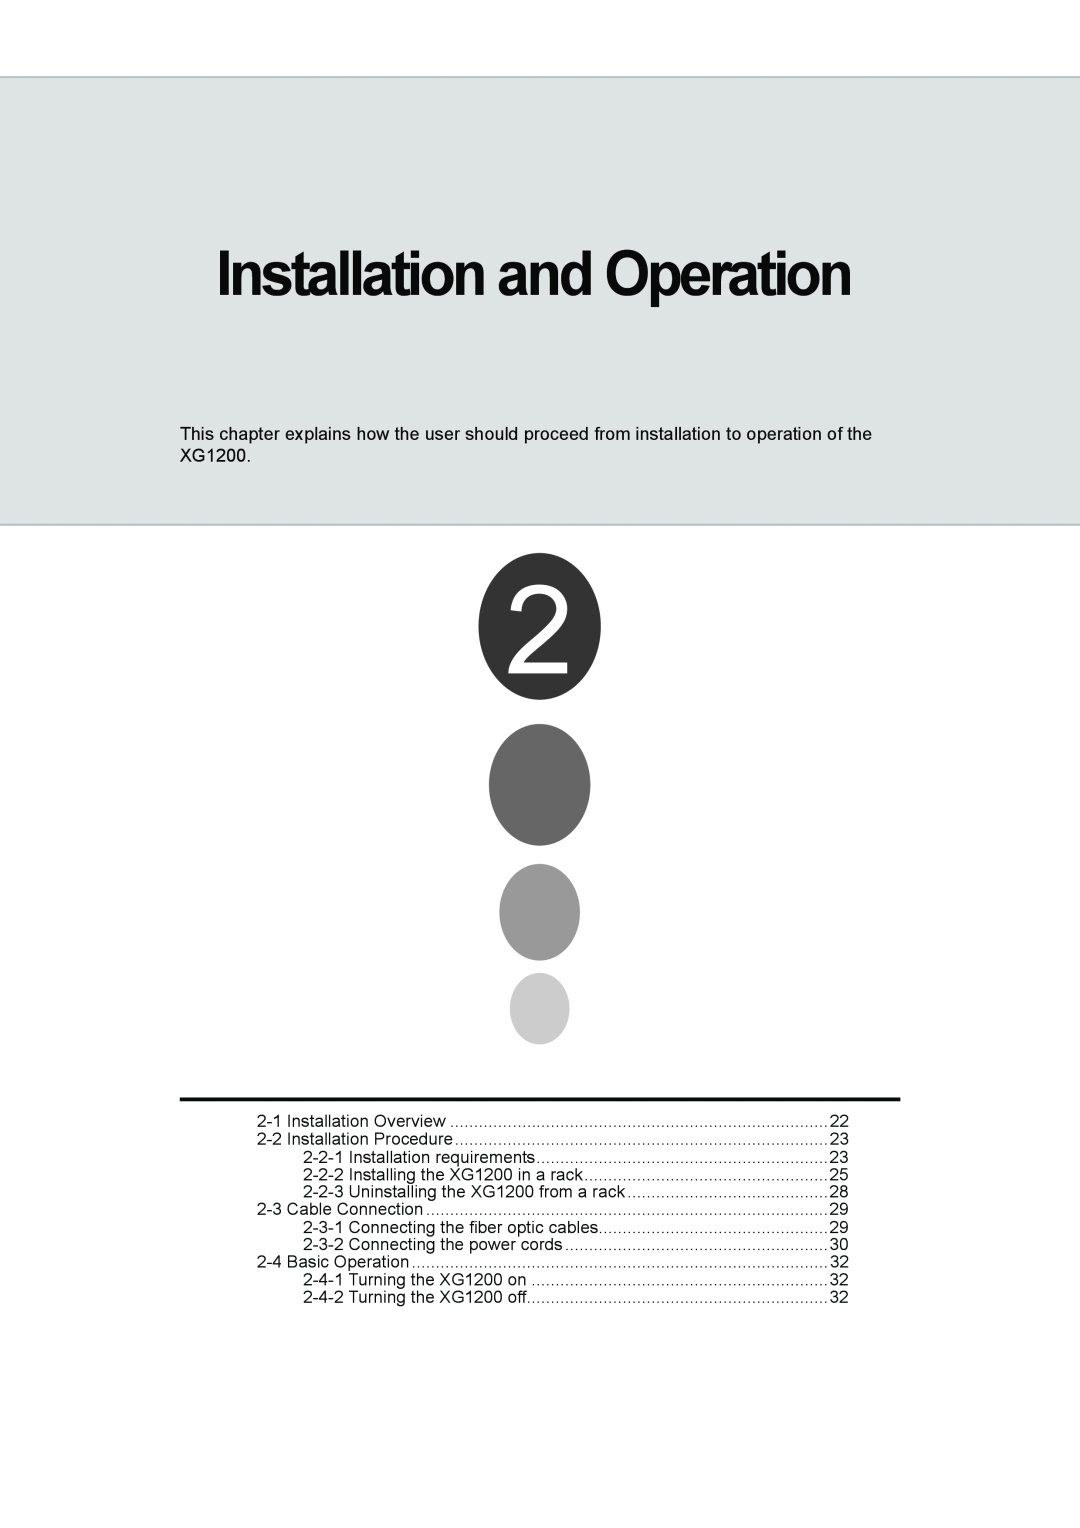 Fujitsu XG1200 manual Installation and Operation, 2-3-1, 2-3-2, 2-4-1, 2-4-2 